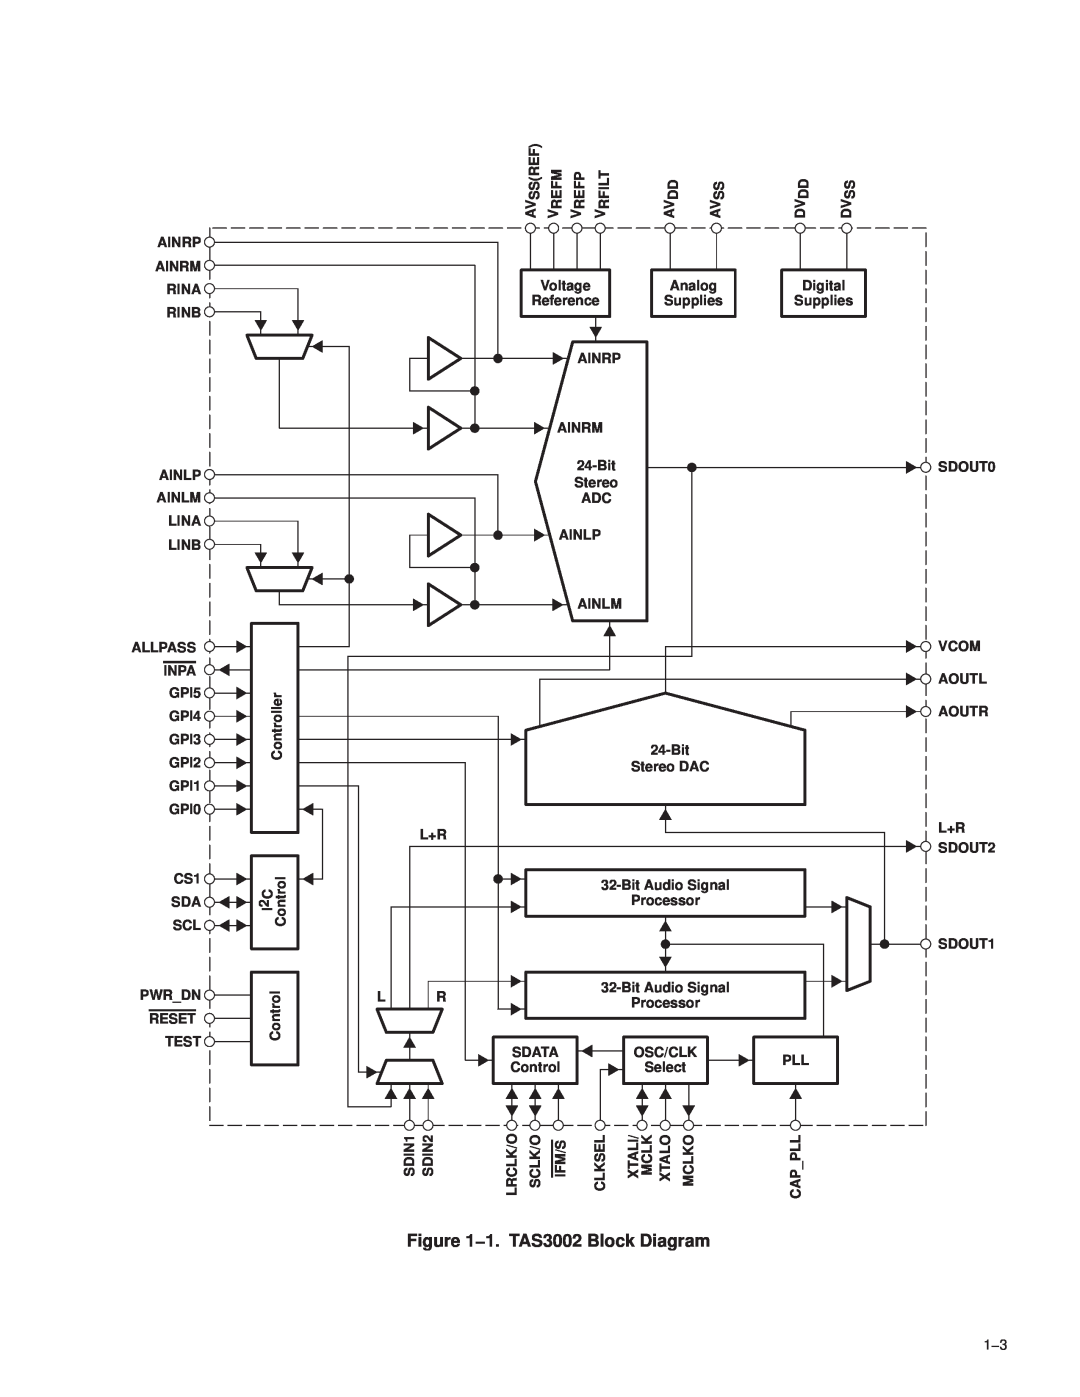 Texas Instruments manual 1. TAS3002 Block Diagram 